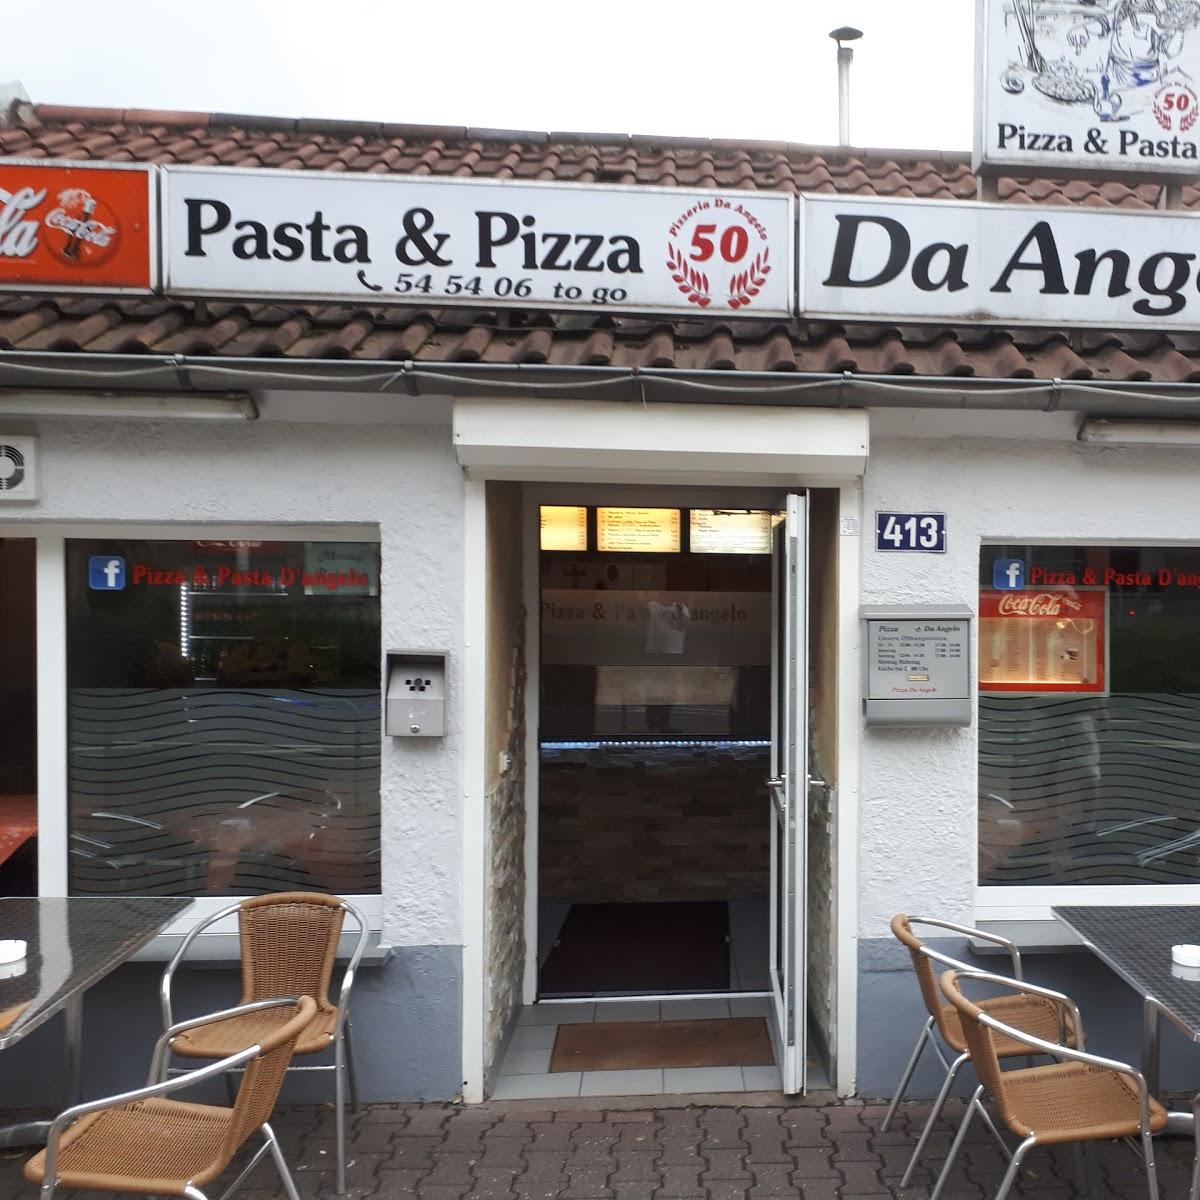 Restaurant "Da Angelo Pizza & Pasta" in Frankfurt am Main